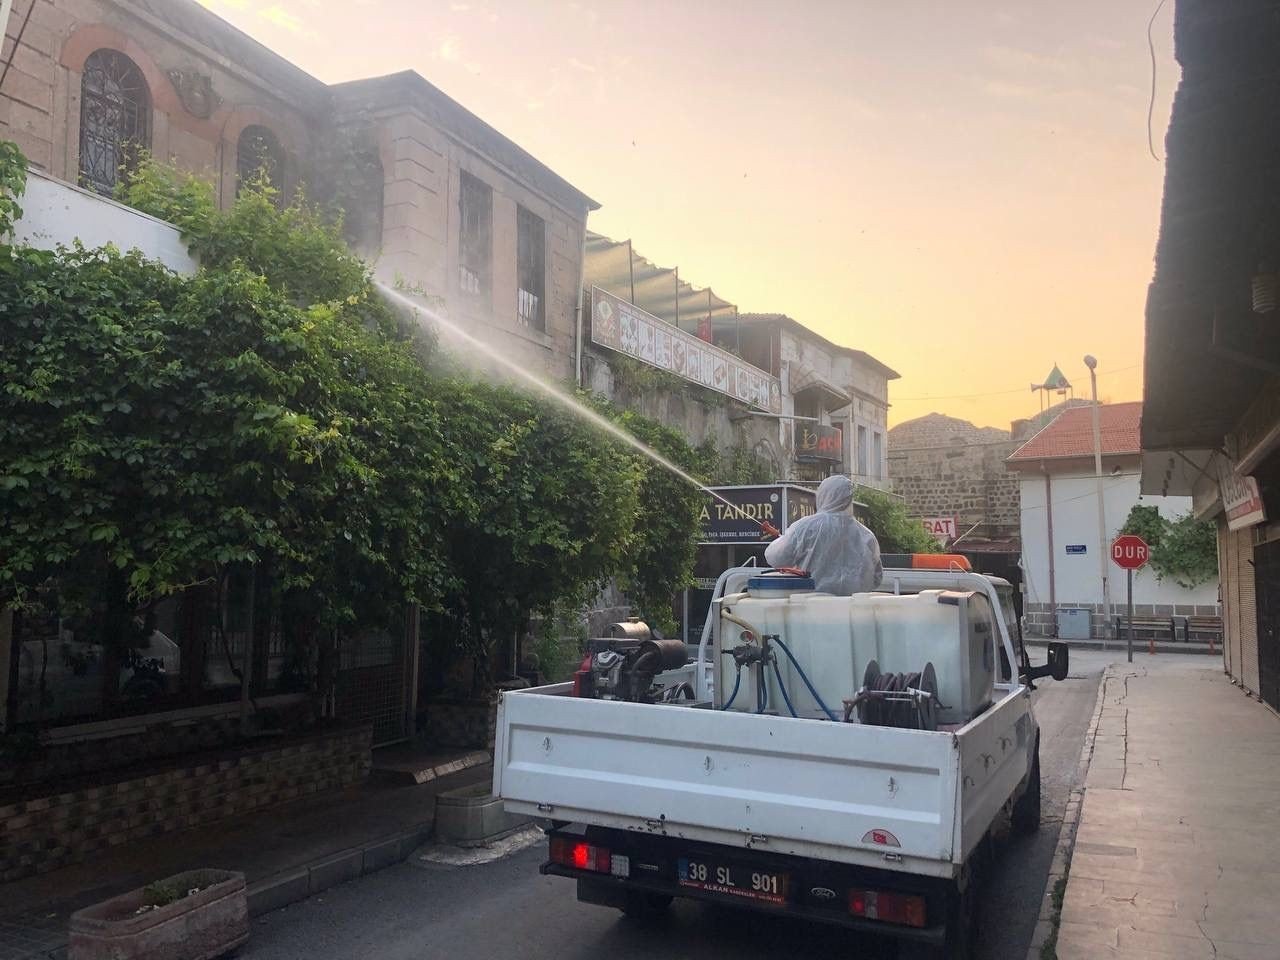 A worker sprays pesticide against insects in Melikgazi, Kayseri, central Türkiye, Aug. 13, 2022. (İHA PHOTO) 